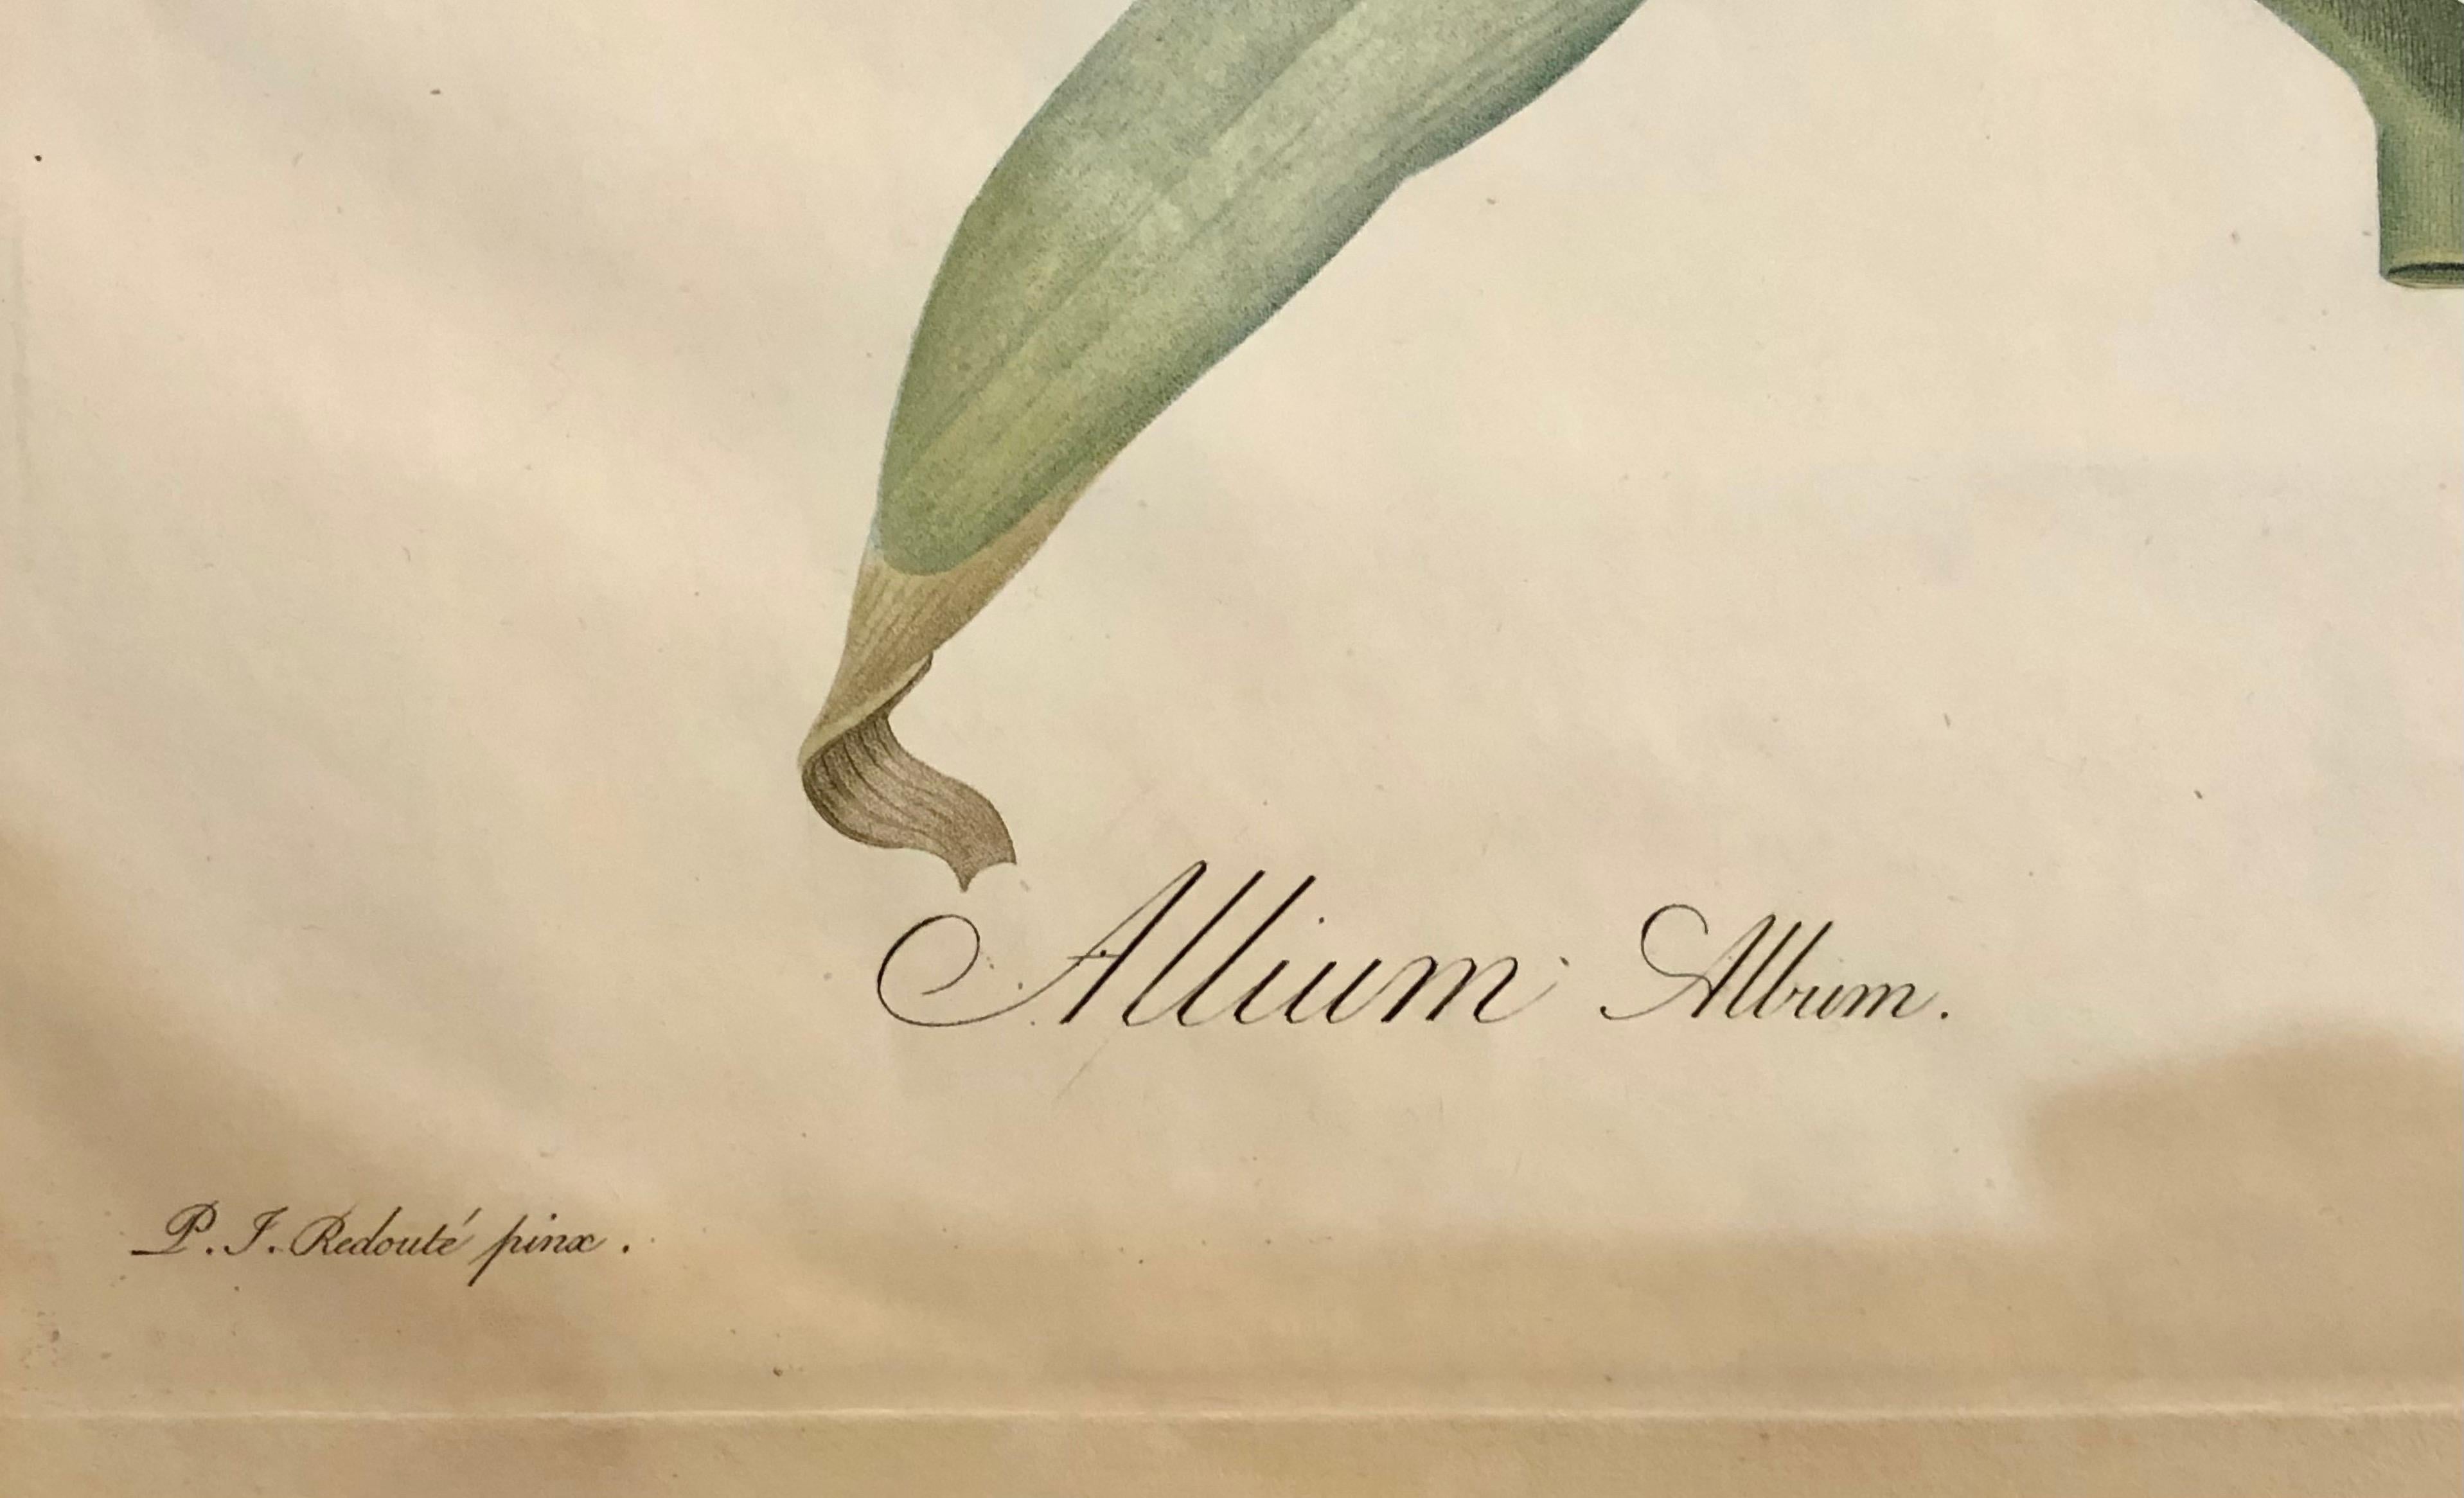 Allium Album Hand Painted Colored Engraving Signed P.J. Redoute 5